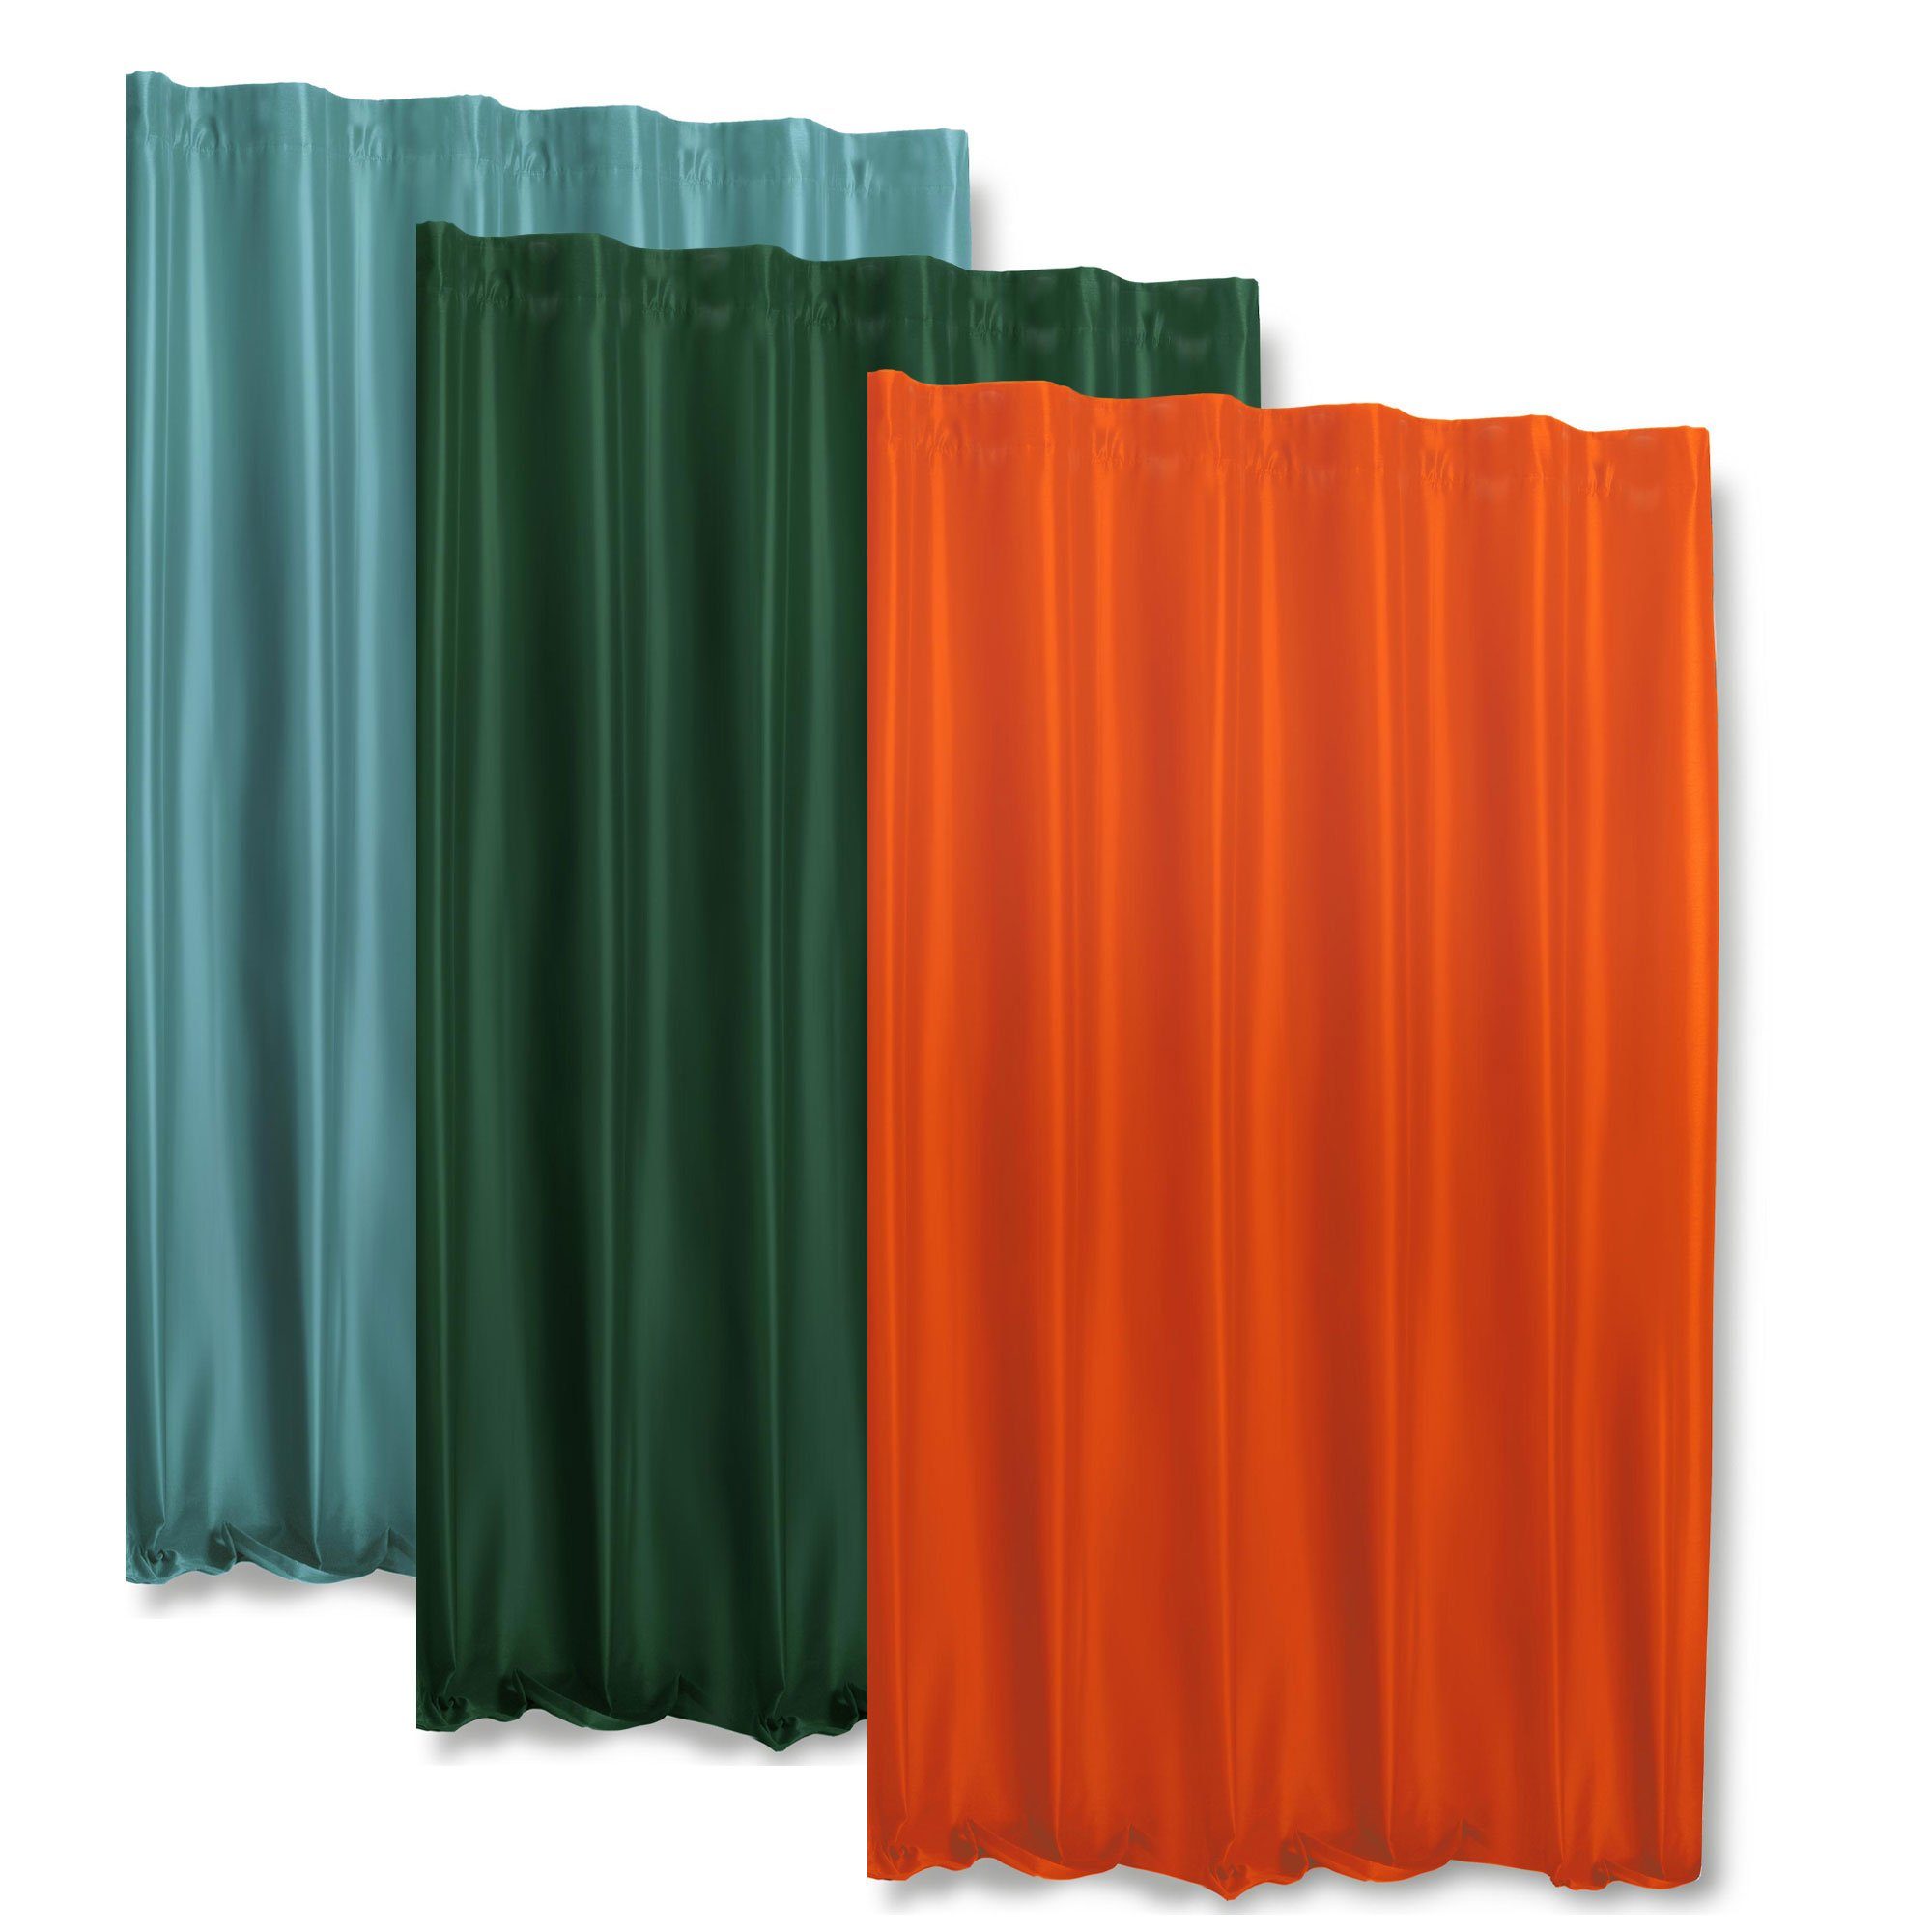 Türvorhang Thermovorhang Orange Fleece, St), Deko, Polar Haus Kräuselband breit Kräuselband blickdicht cm 245x245 (1 Polyester blickdicht, und